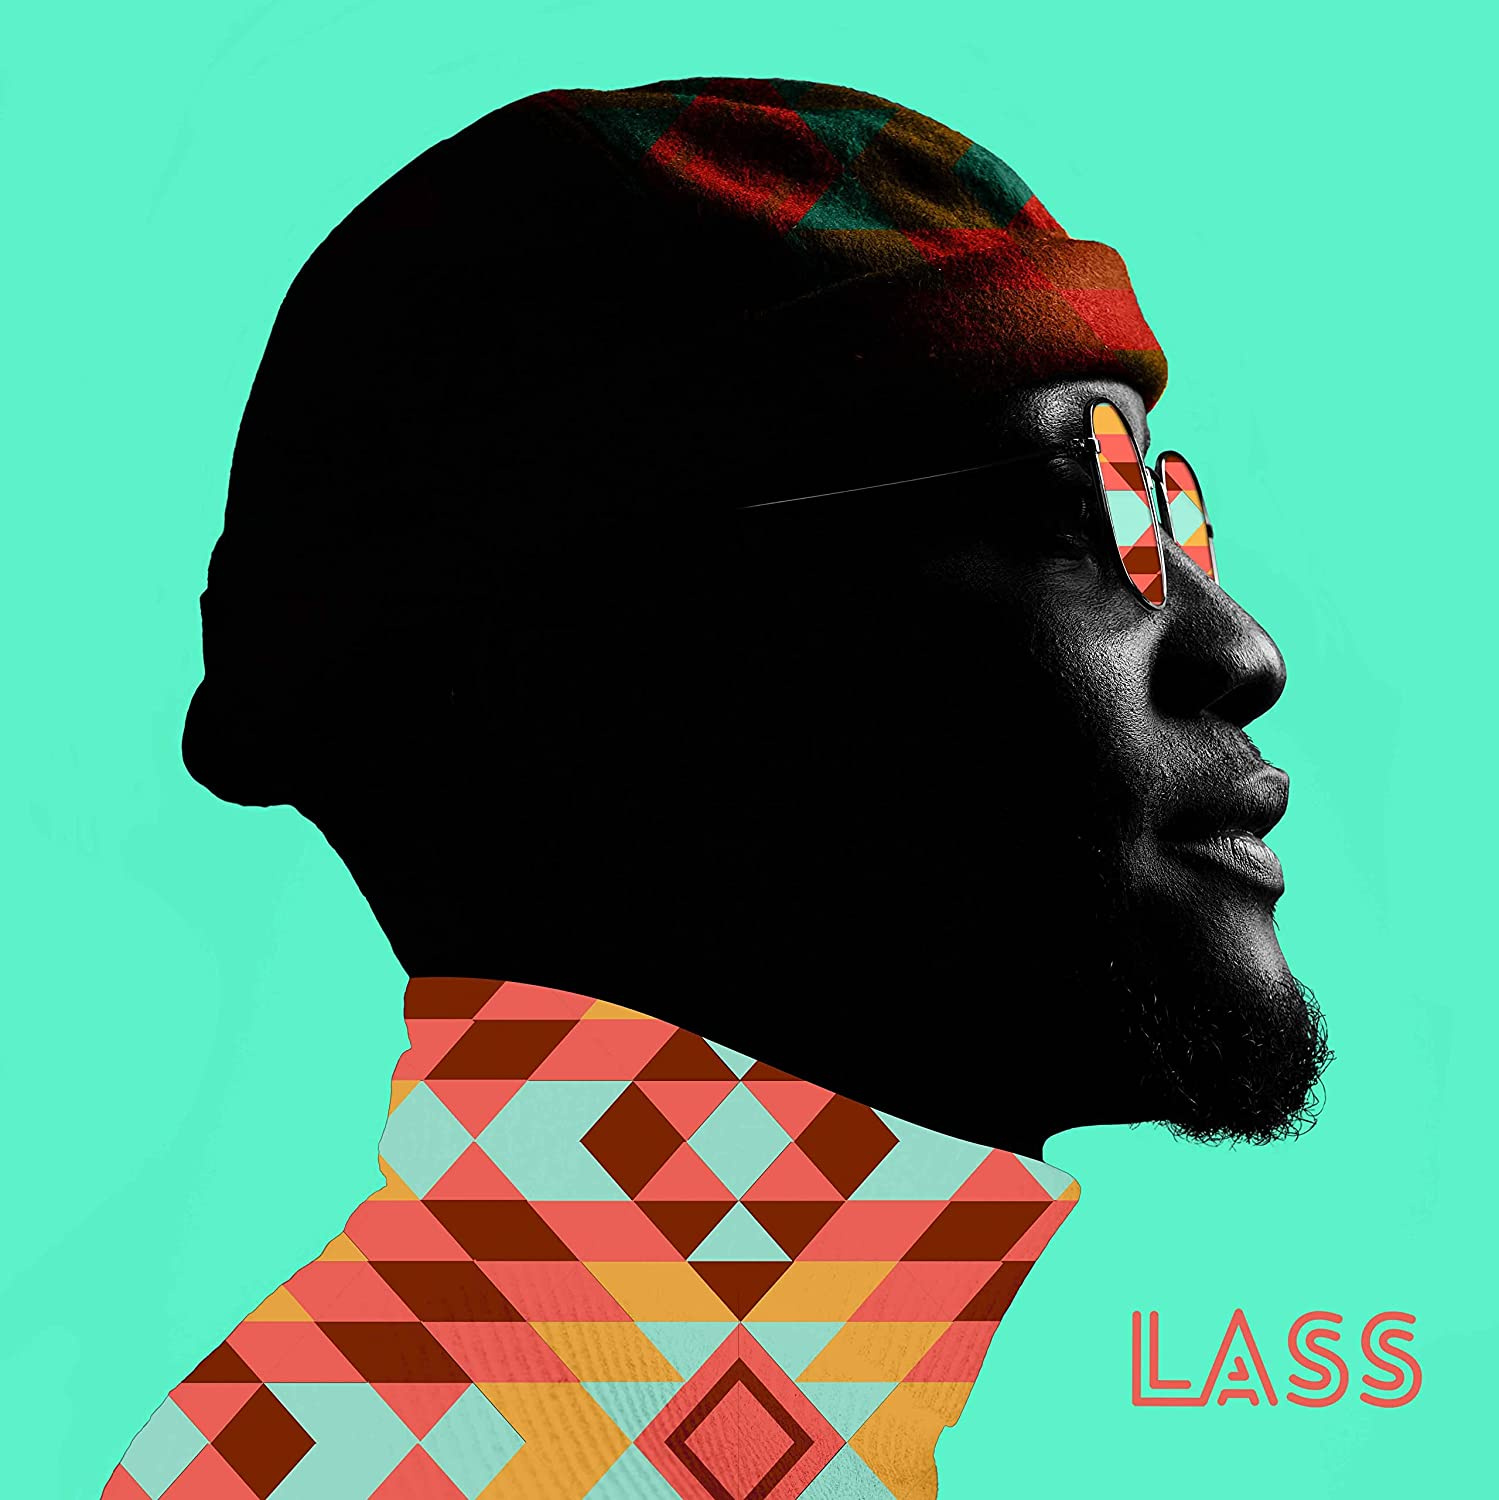 Lass - Lass vinyl cover